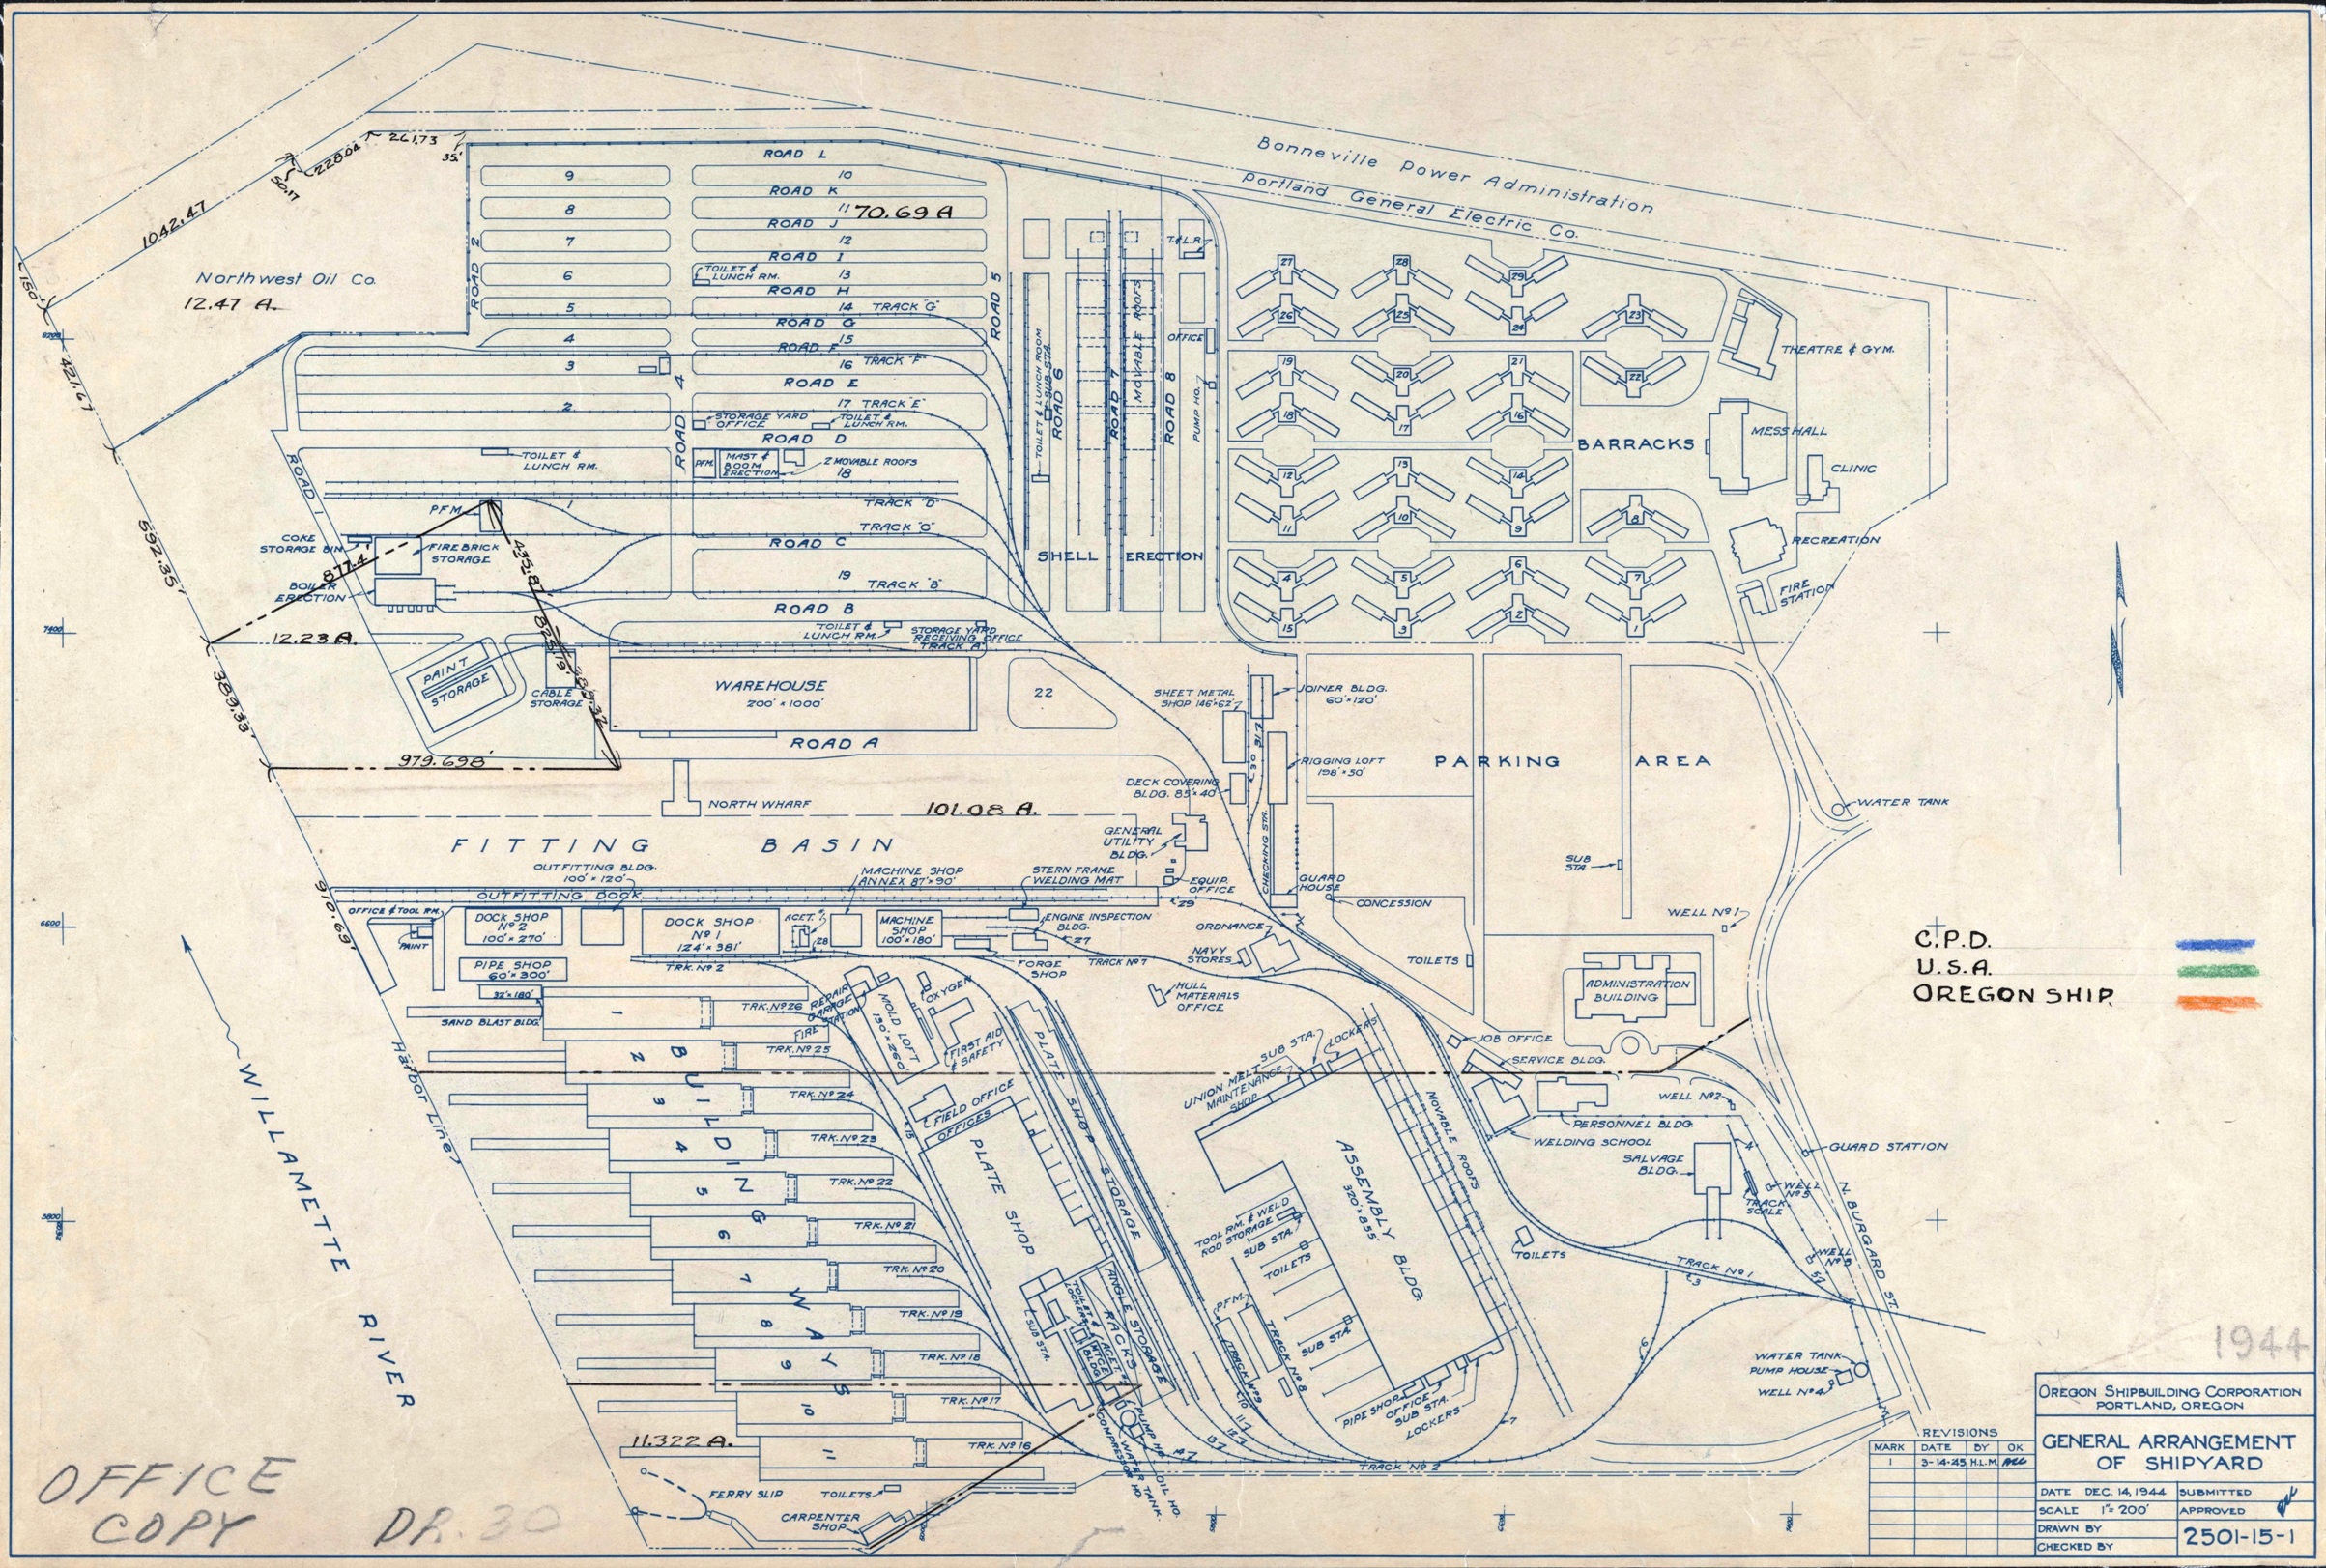 Mar 1945 map showing the general arrangement of the Kaiser Oregon Shipbuilding Corporation yard, Portland, Oregon, United States.